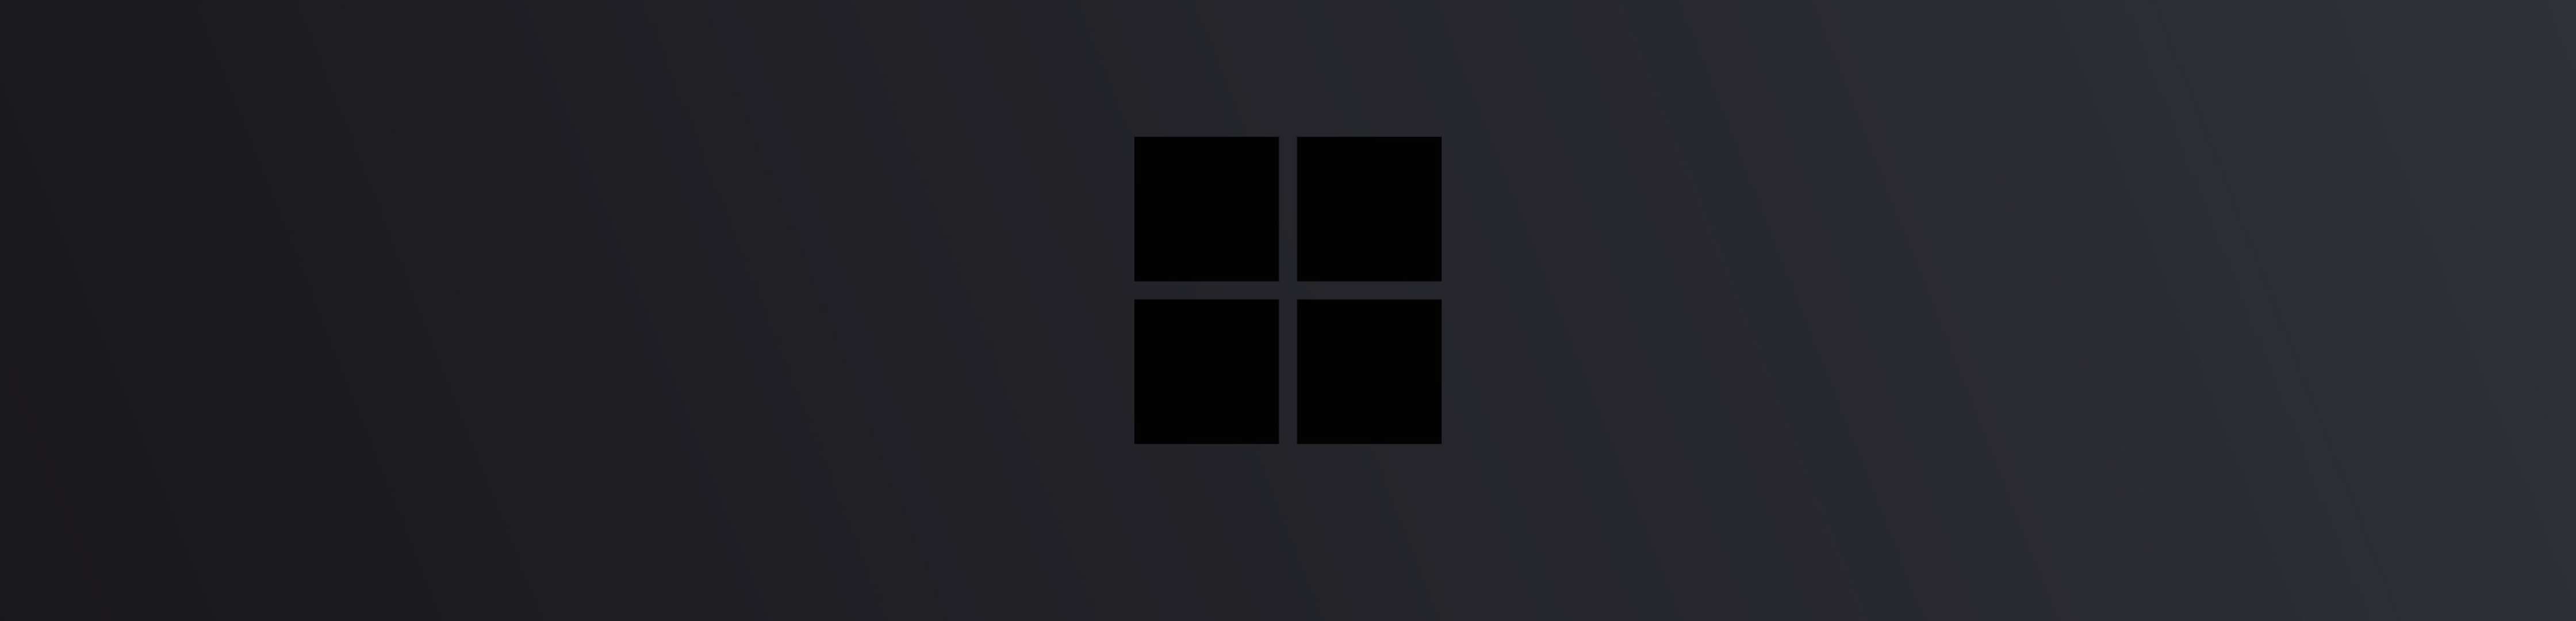 4480x1080 Windows 10 Logo Minimal Dark 4480x1080 Resolution Wallpaper